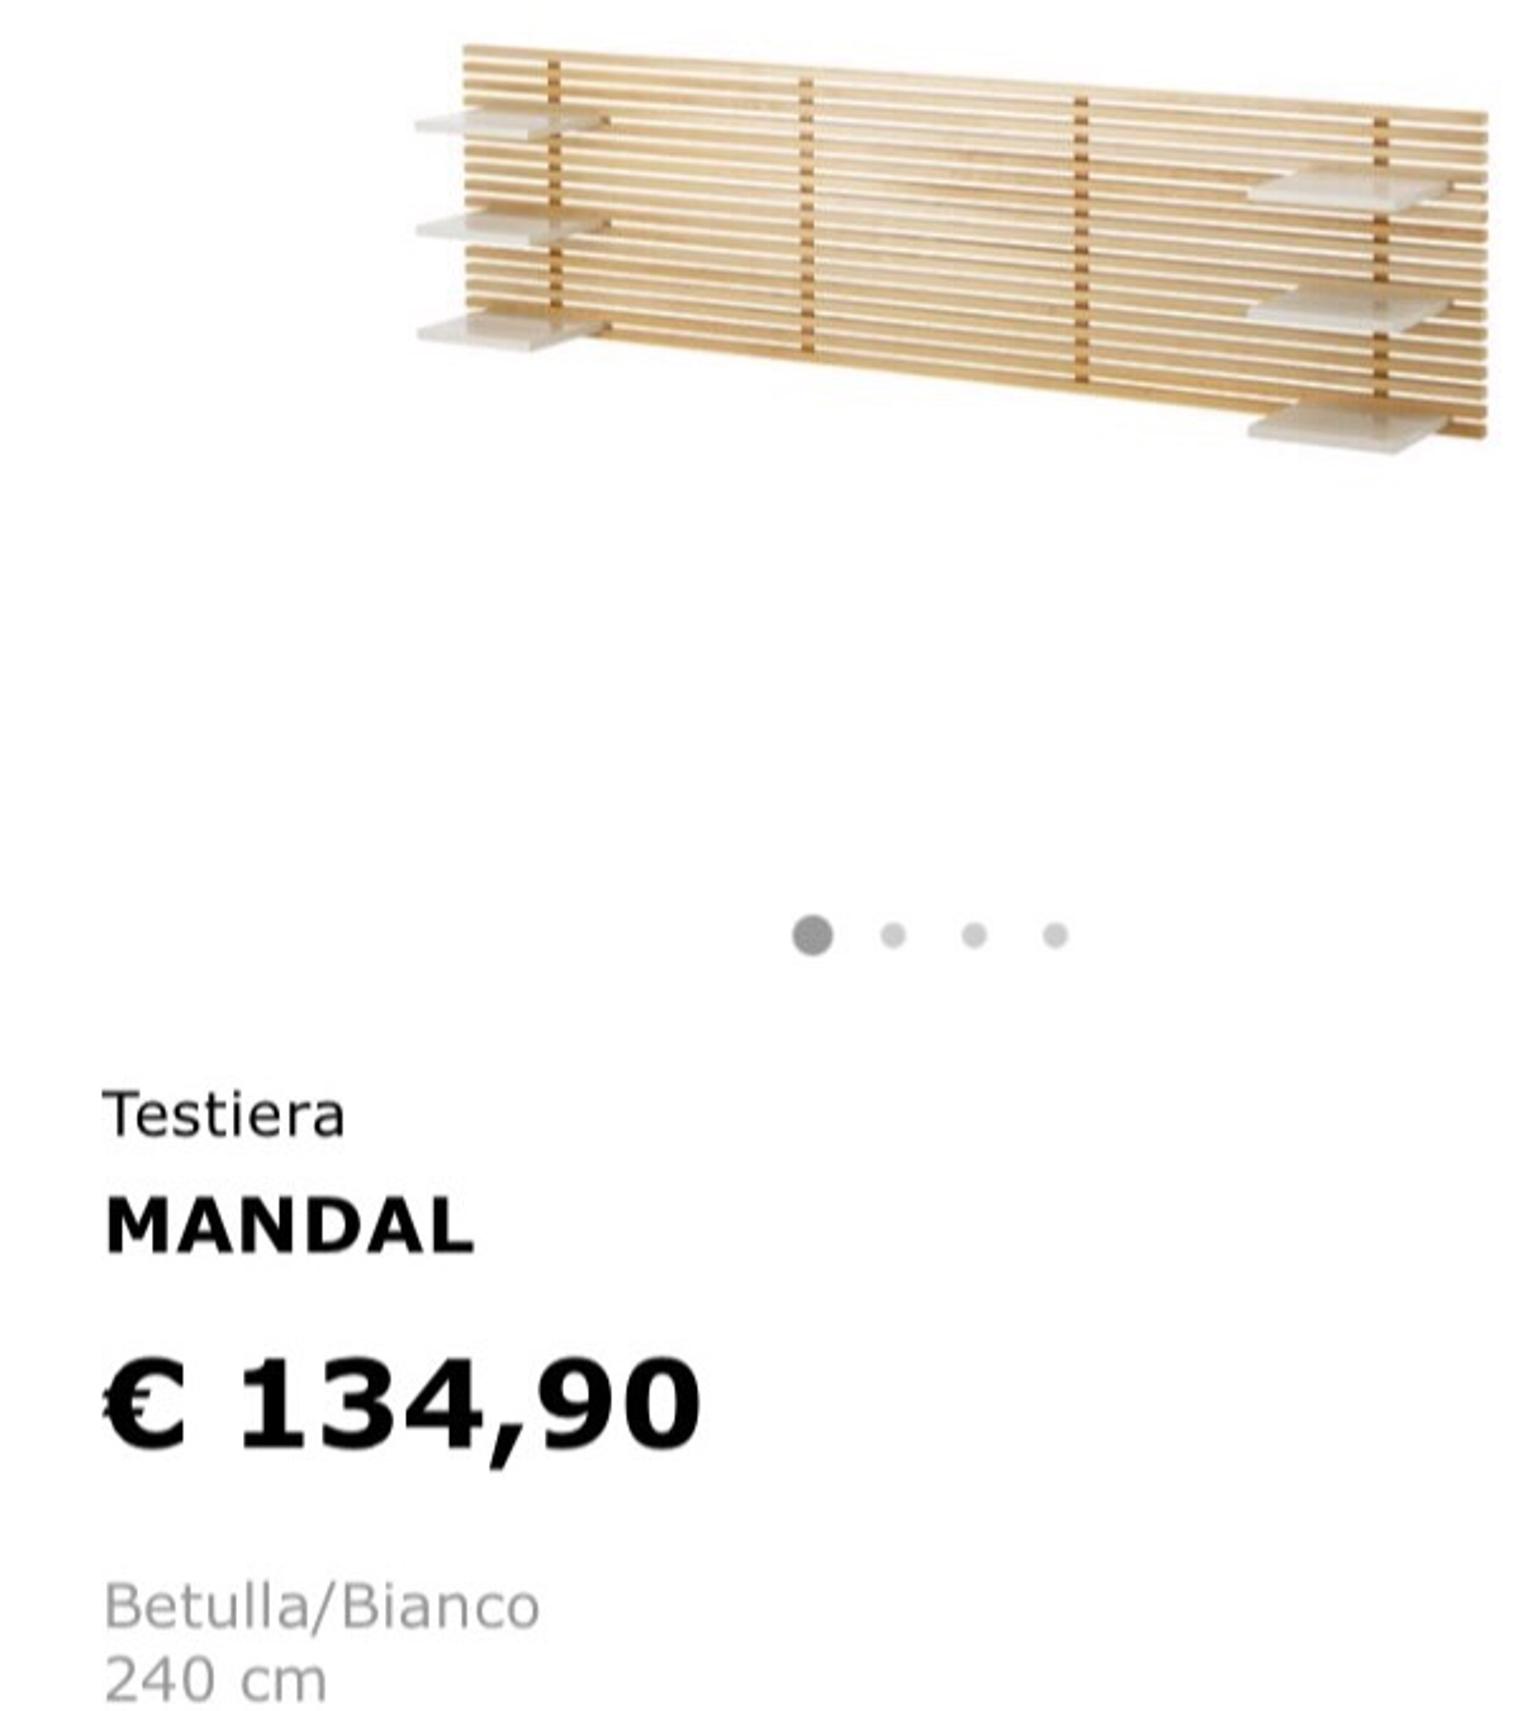 Testiera Letto Ikea In 47030 Gatteo For 60 00 For Sale Shpock